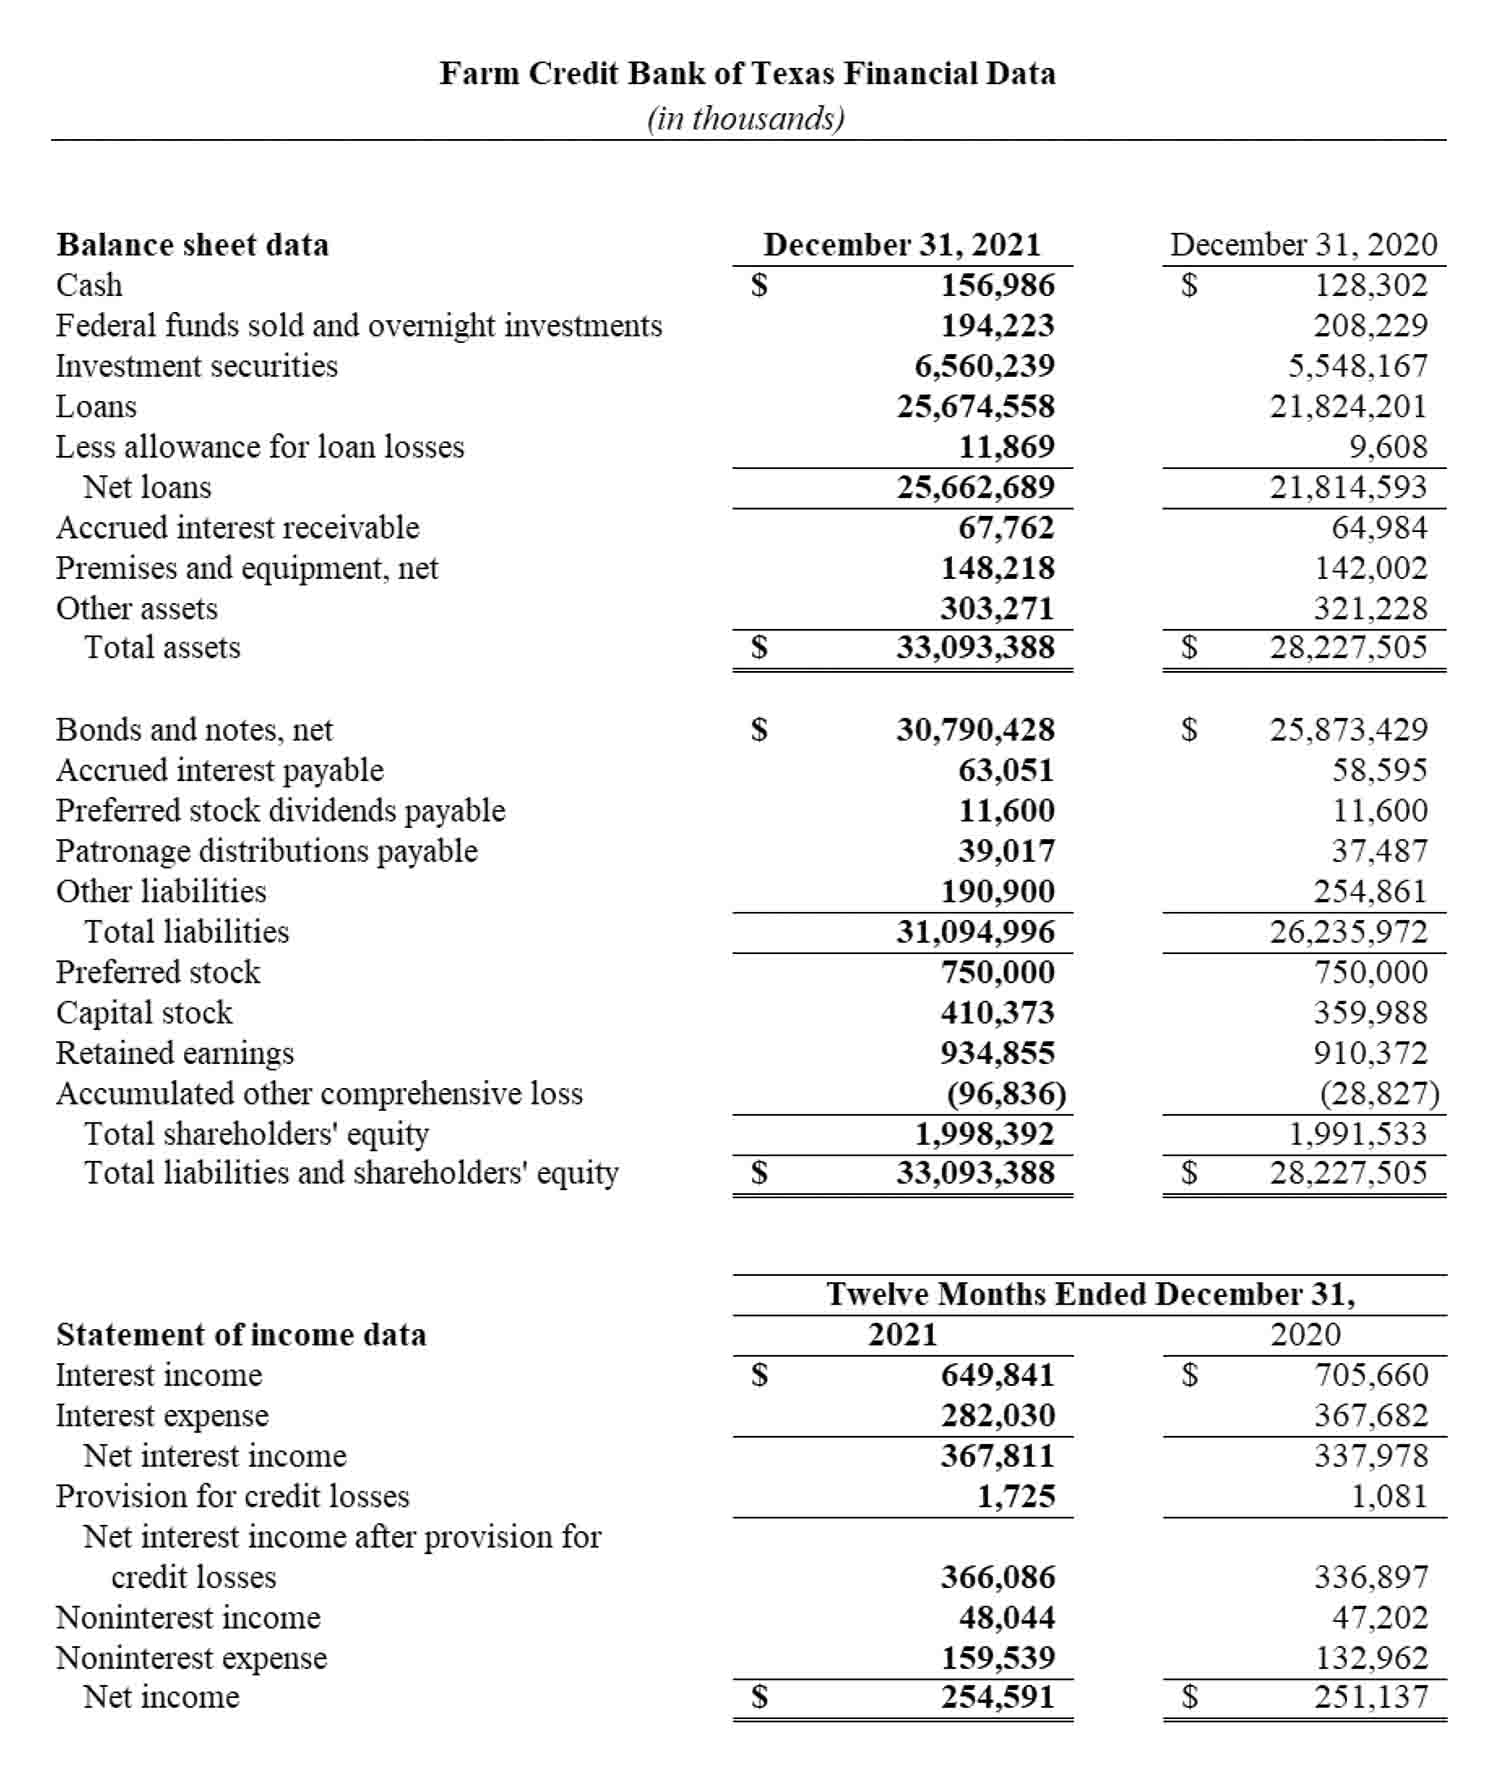 image of financial data spreadsheet